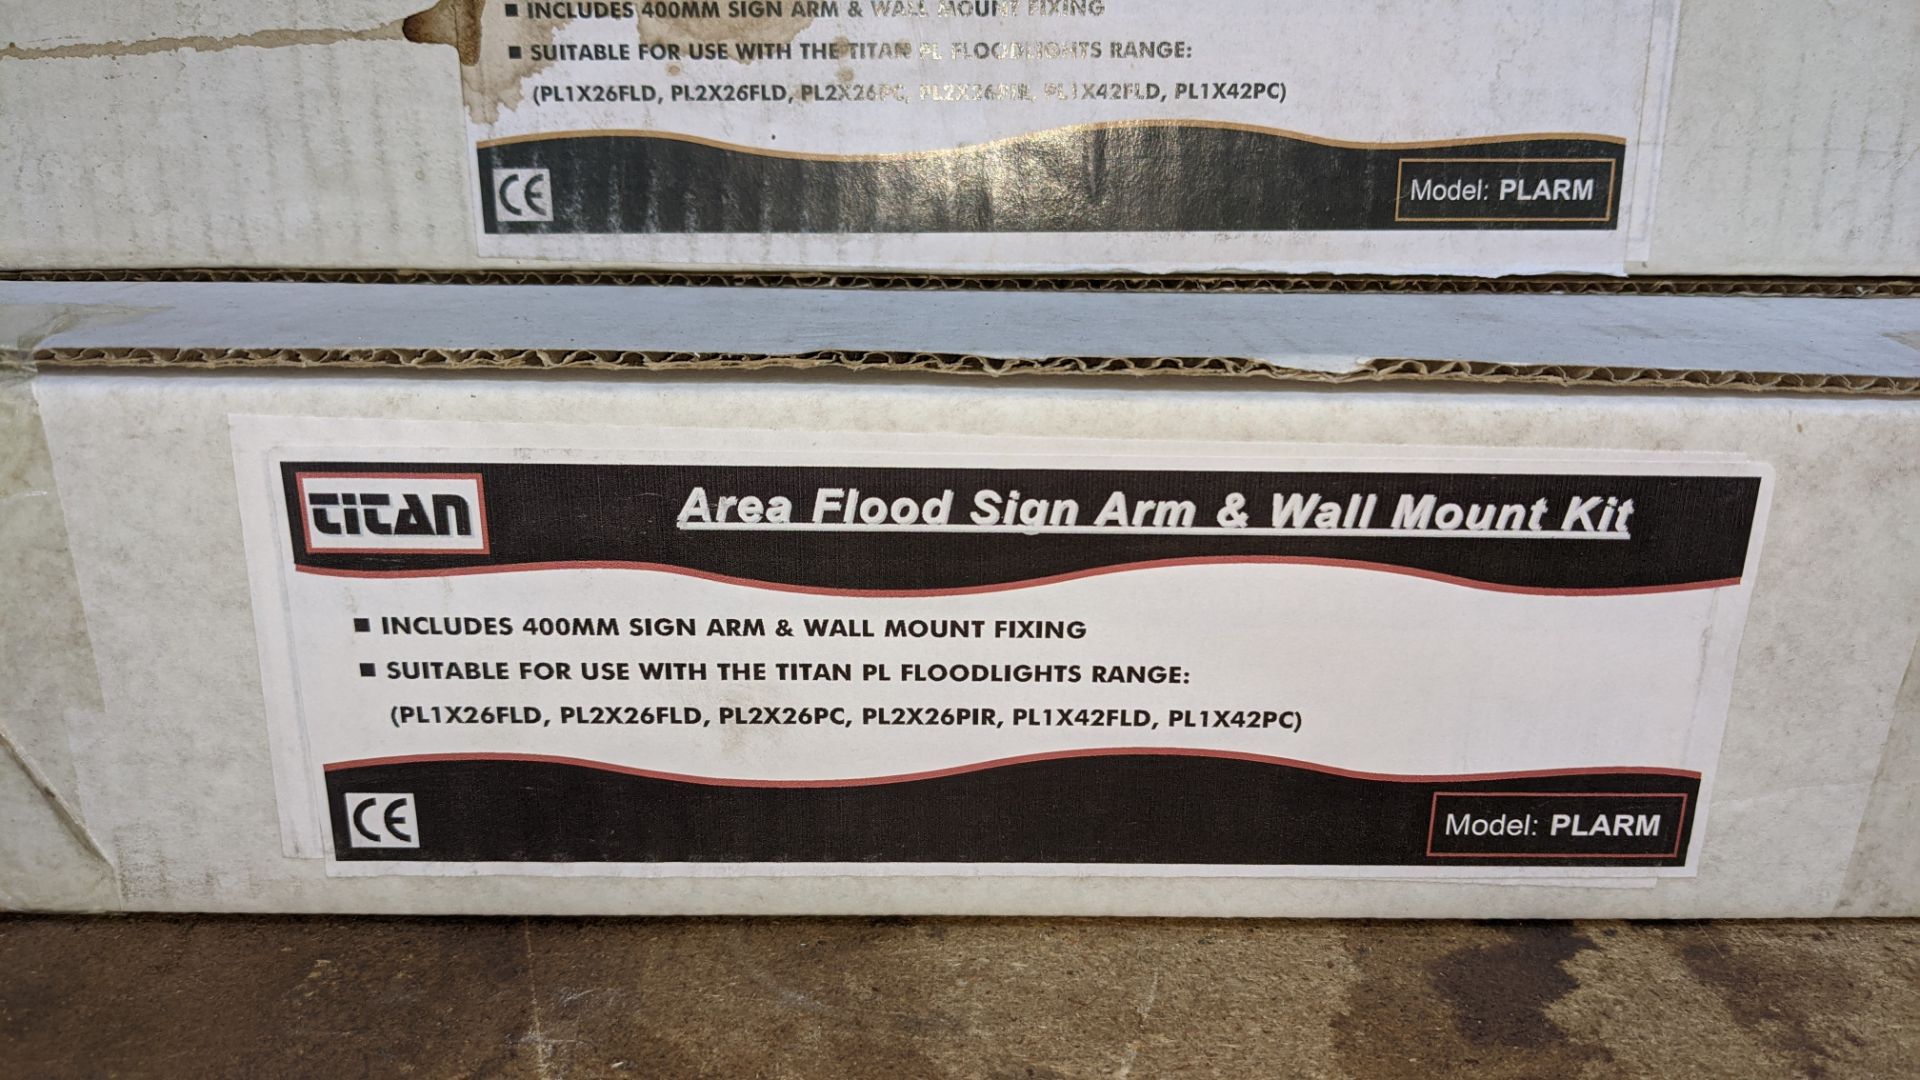 11 off Titan area flood sign arm & wall mount kits - Image 2 of 3